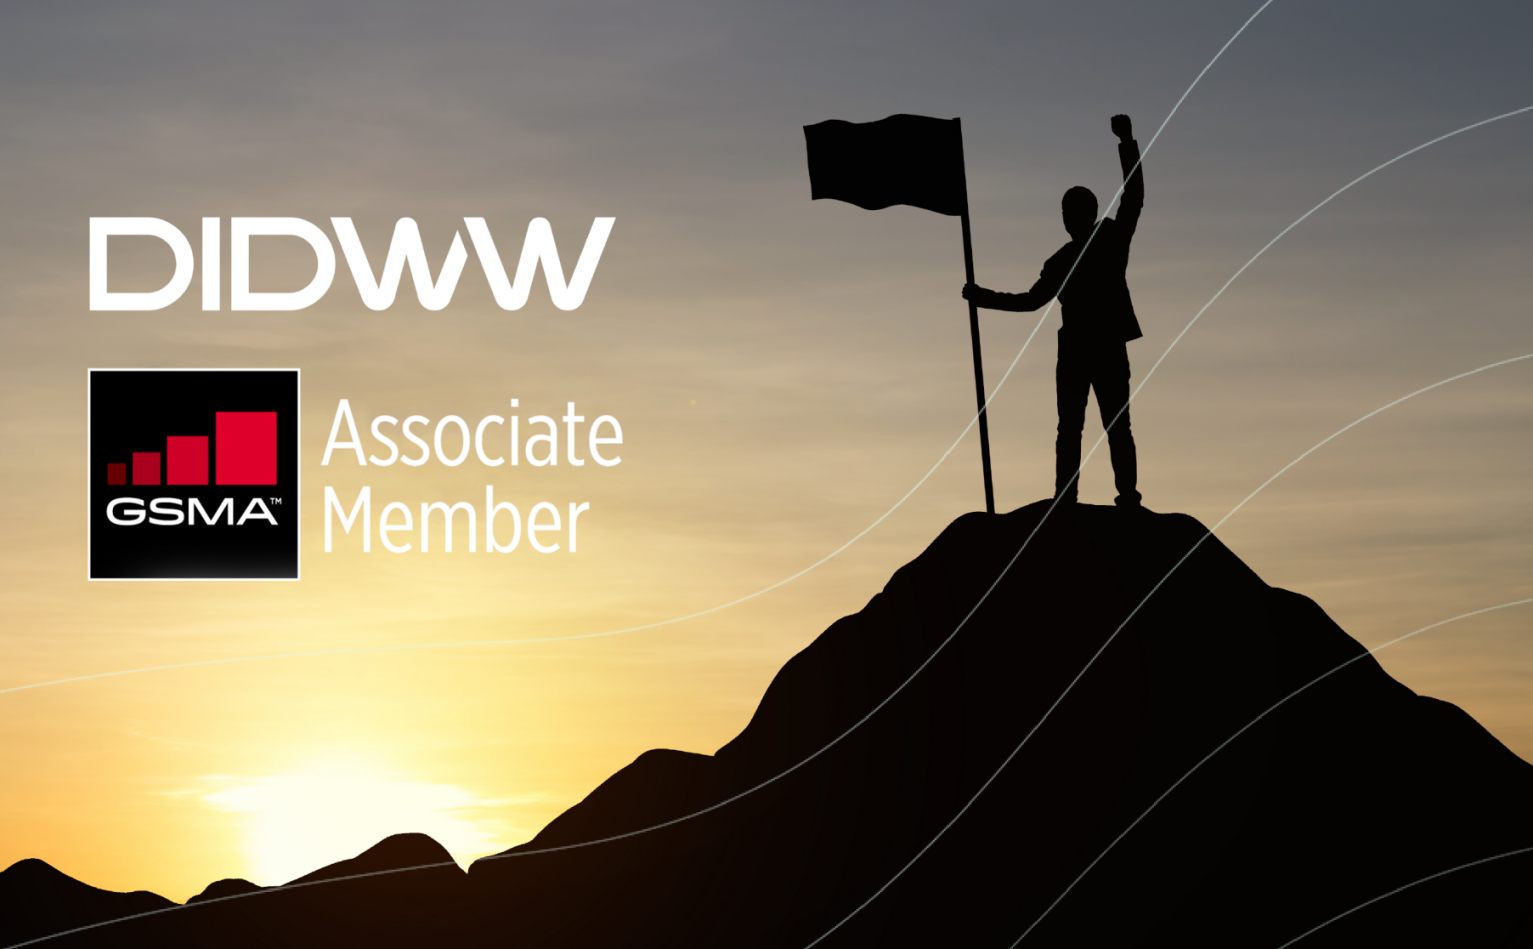 DIDWW joins the international association GSMA